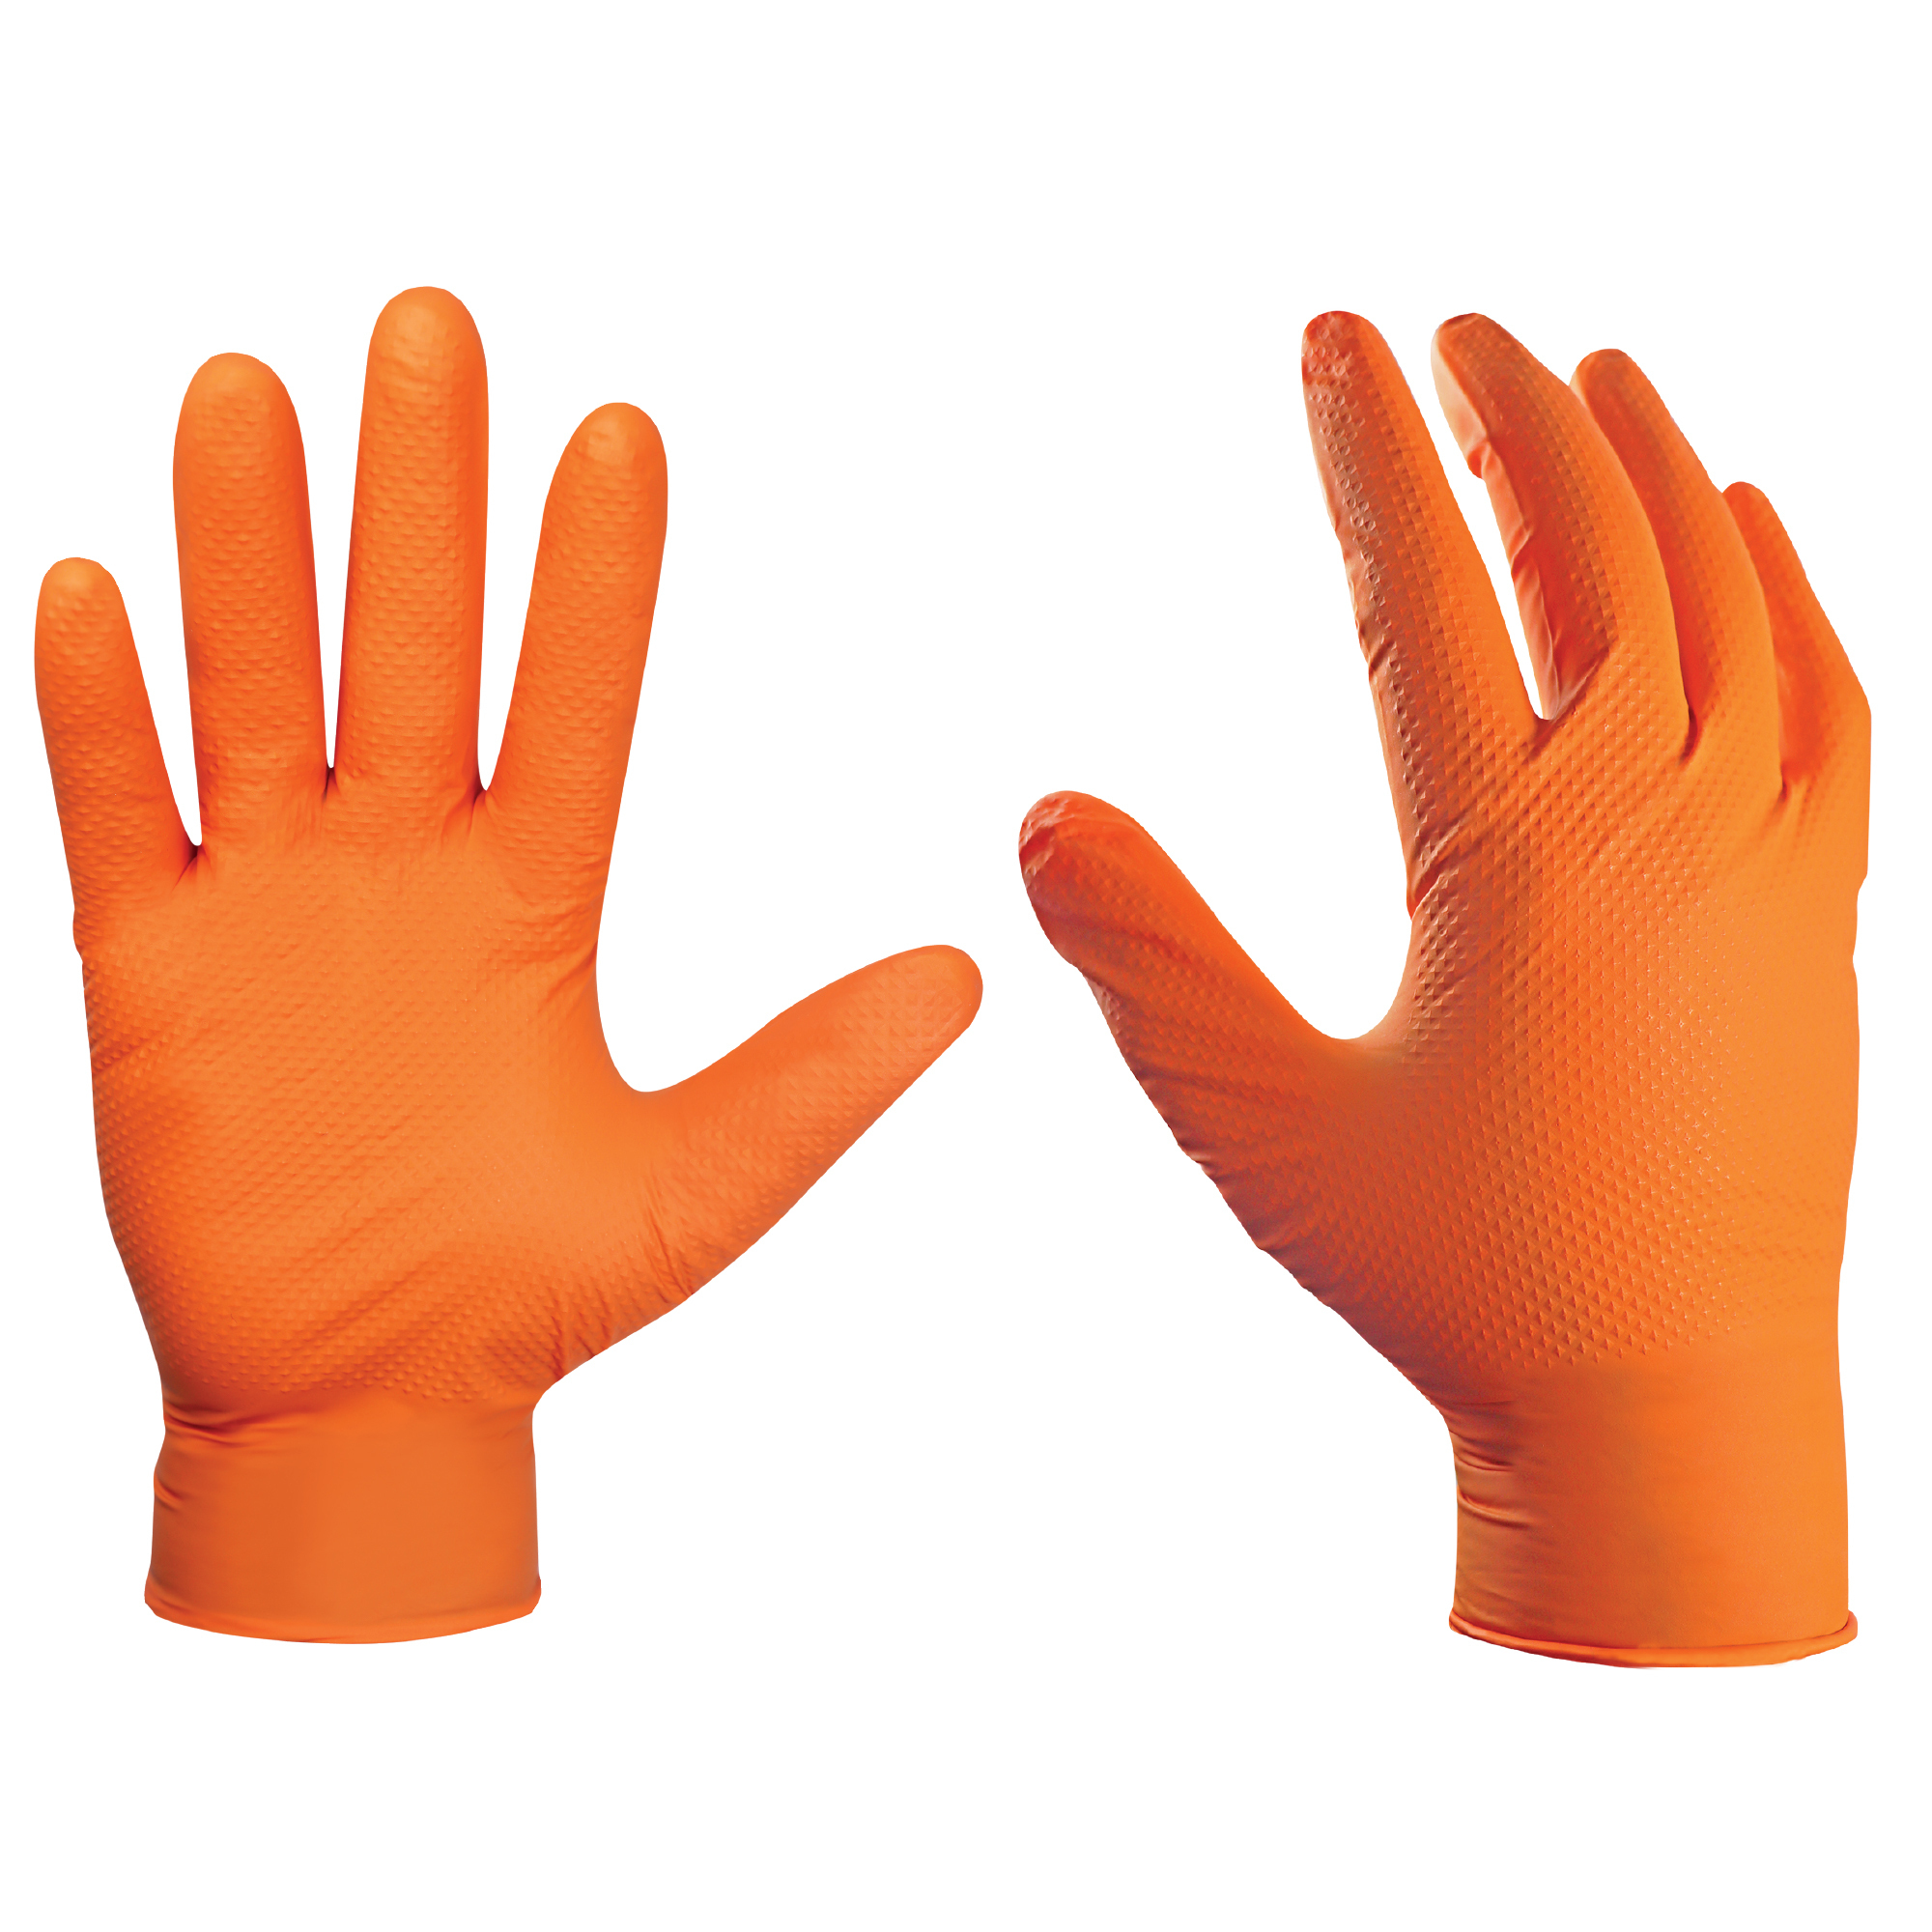 General Electric, 8mil Nitrile Orange Extra Large Gloves 100pk, Size XL, Color Orange, Included (qty.) 100 Model GG622XL